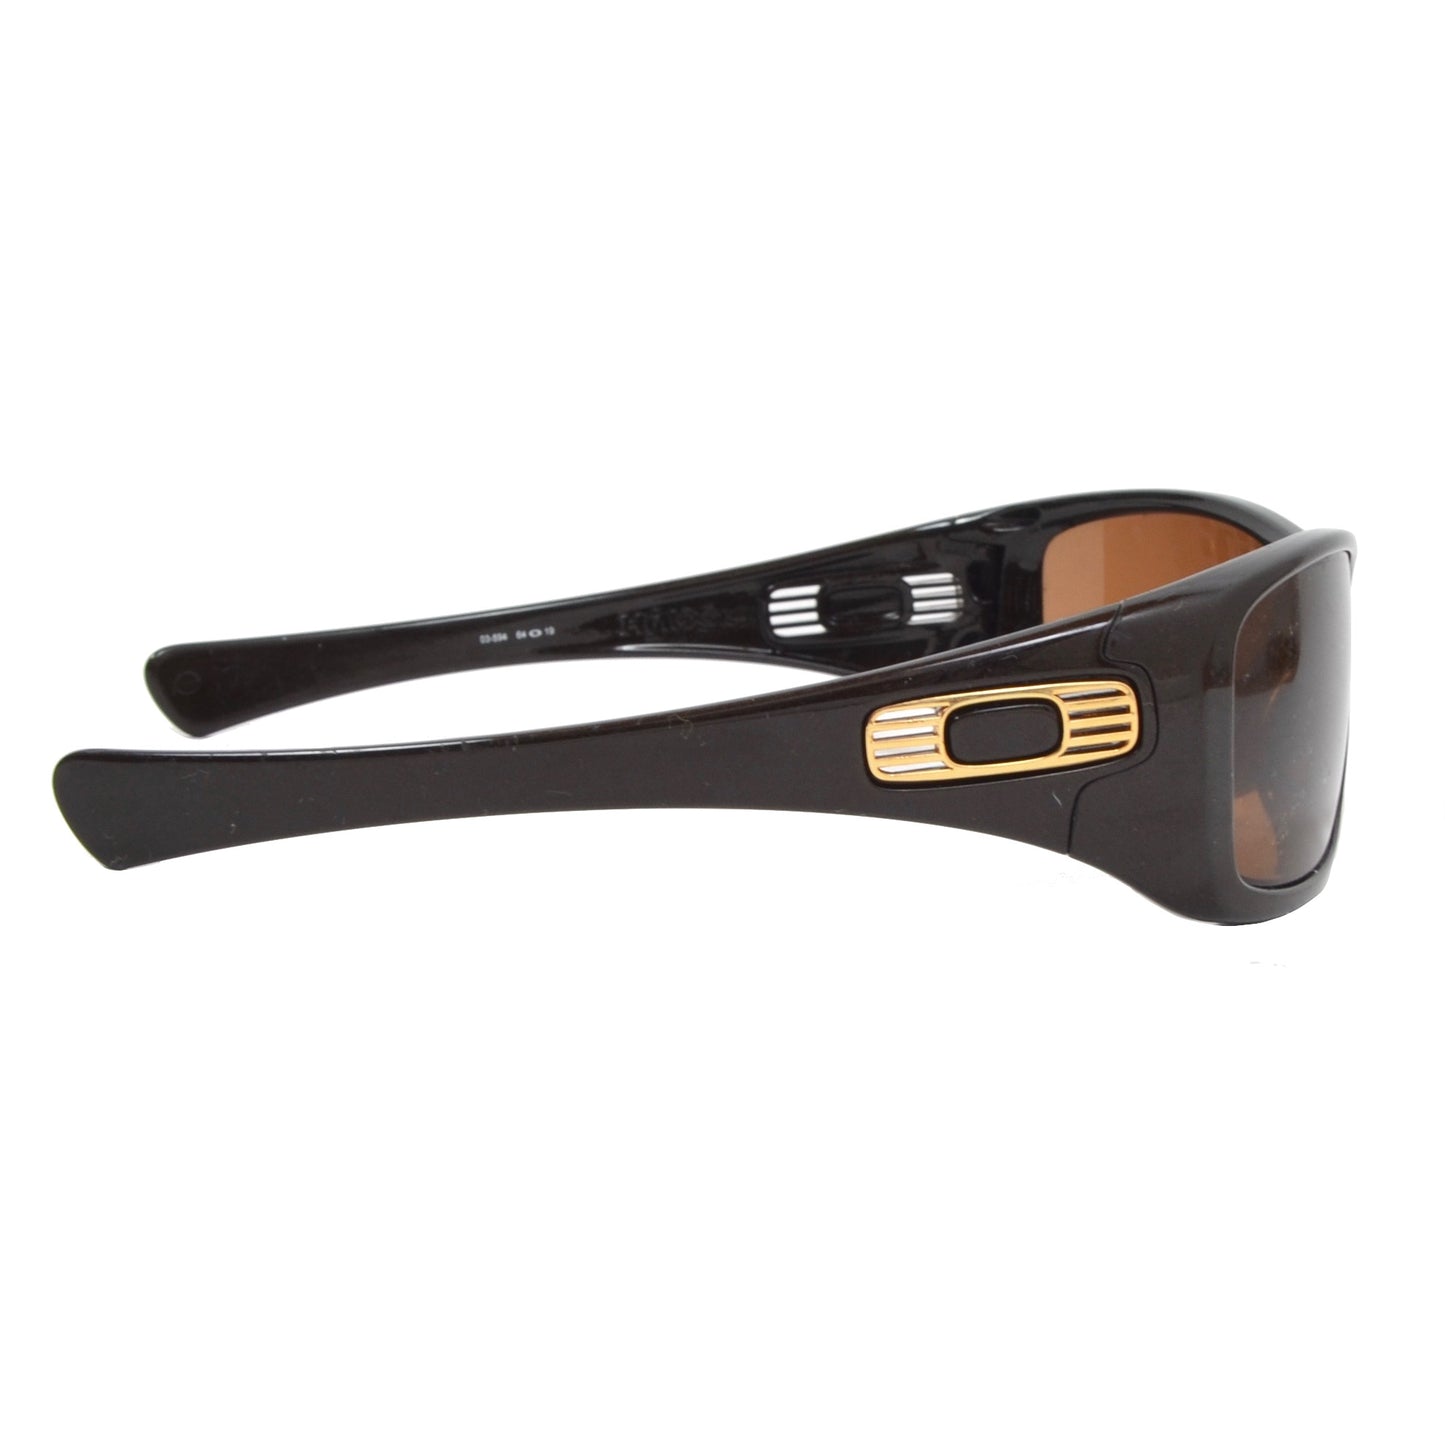 Oakley Hijinx 03-594 Sunglasses - Brown Sugar/Dark Bronze